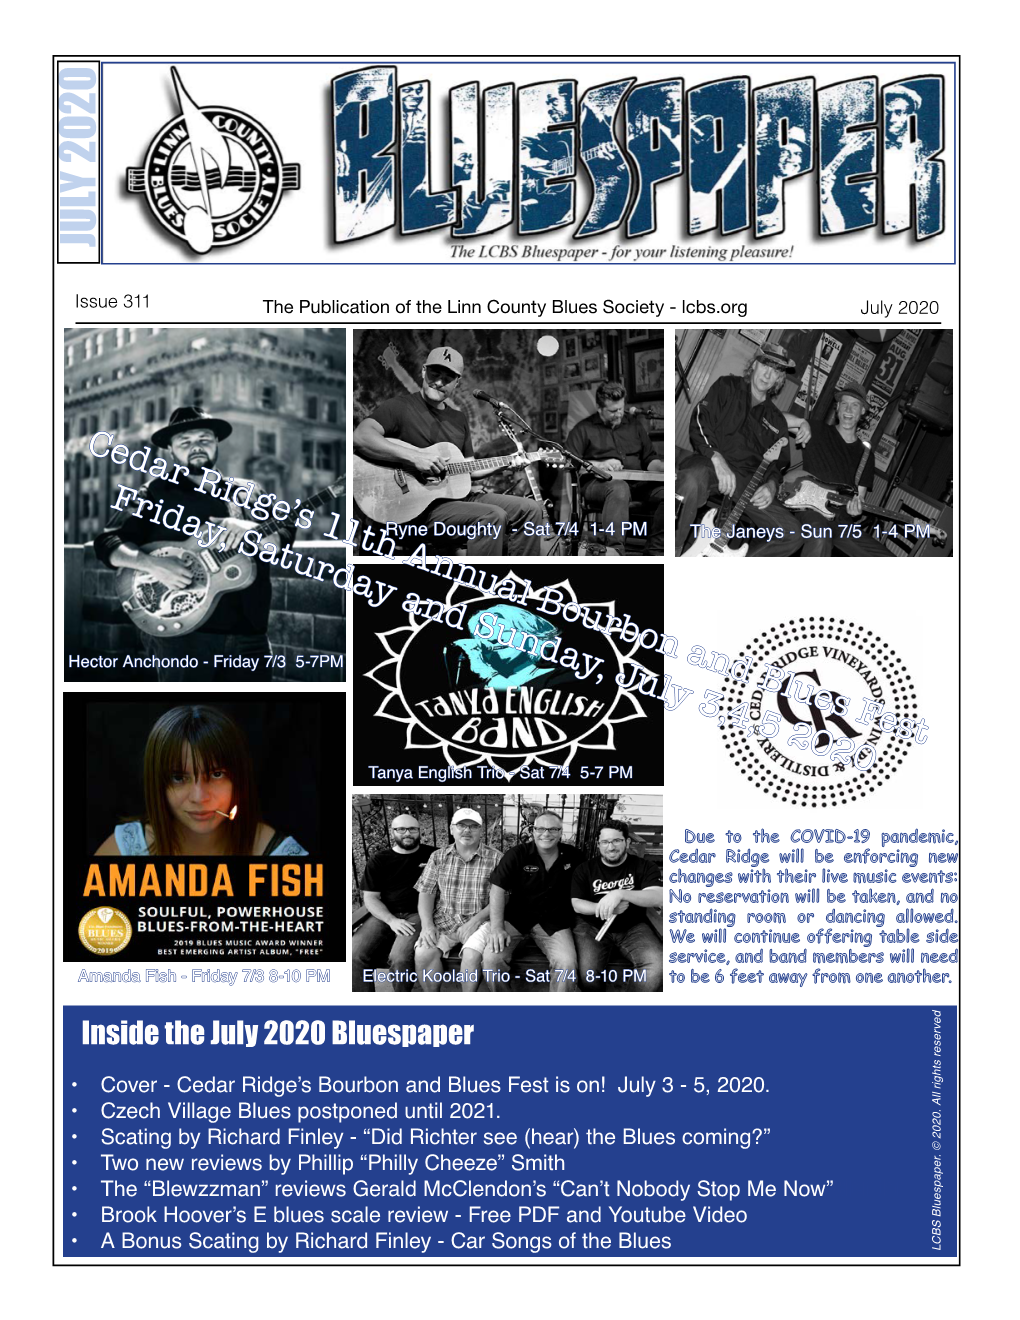 Inside the July 2020 Bluespaper 2020 Inside July the Fest Blues and Bourbon Annual 11Th Ridge’S Cedar